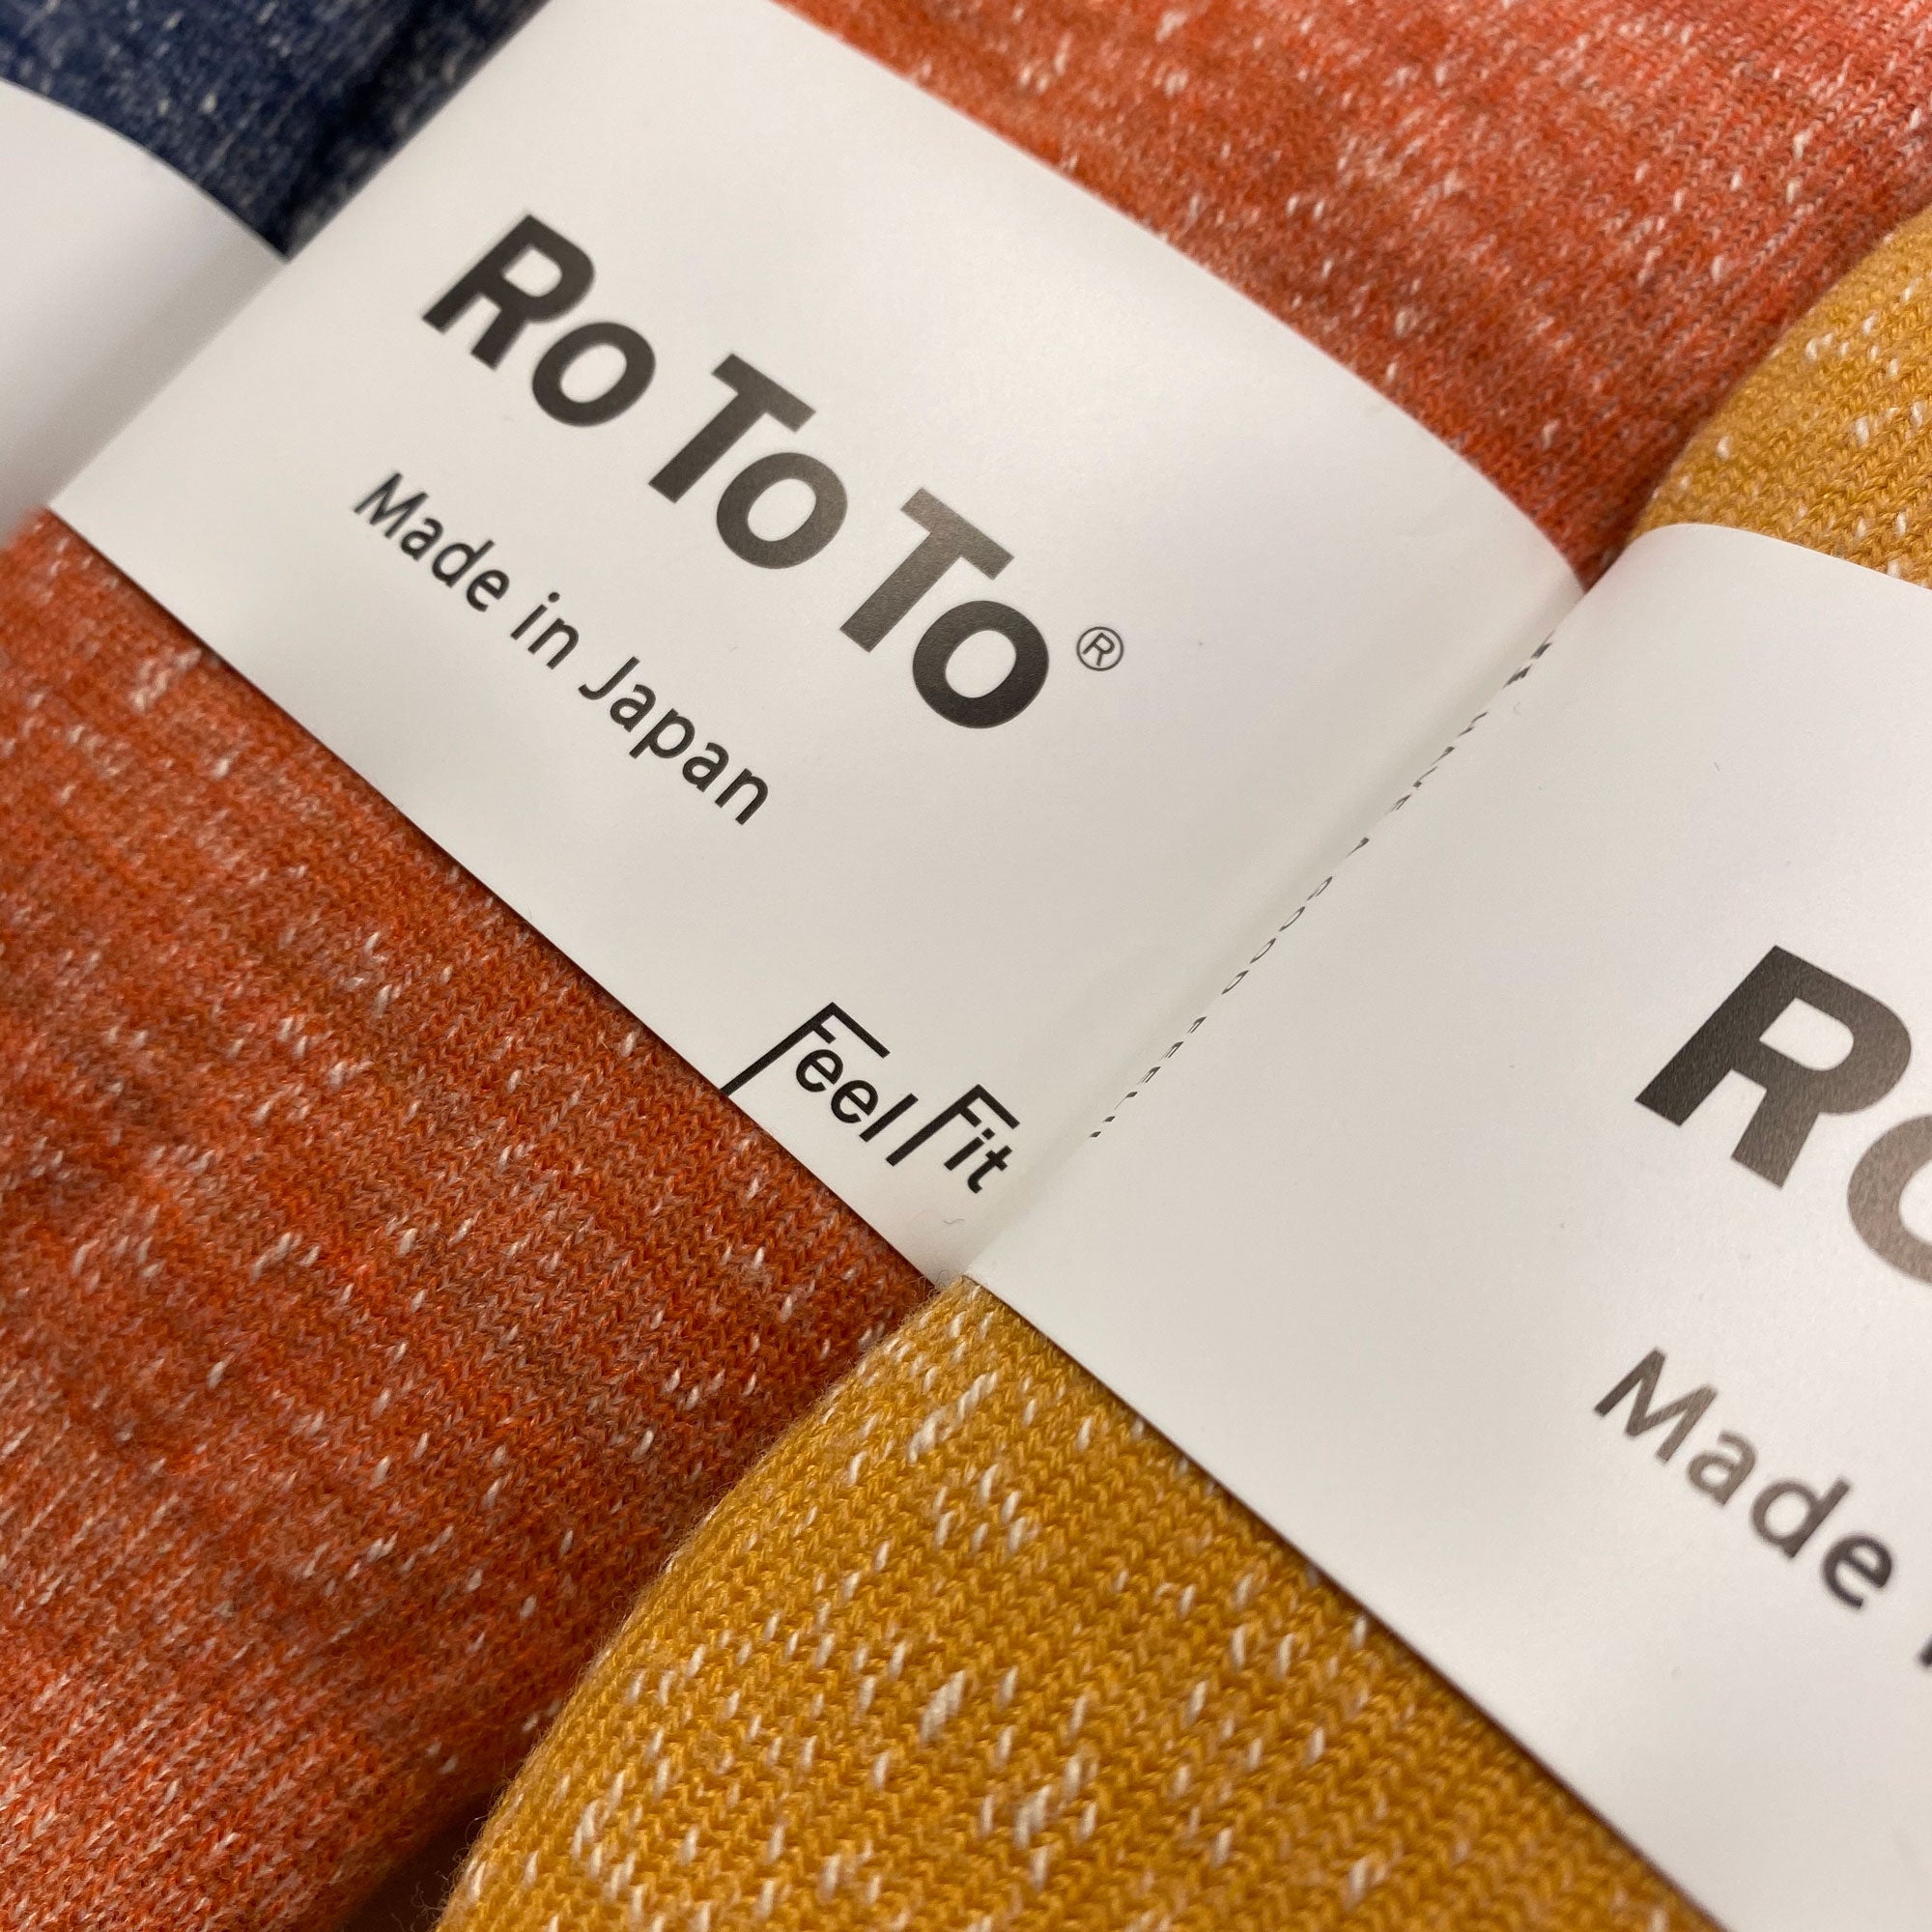 RoToTo Double Face Merino Wool Socks - Orange